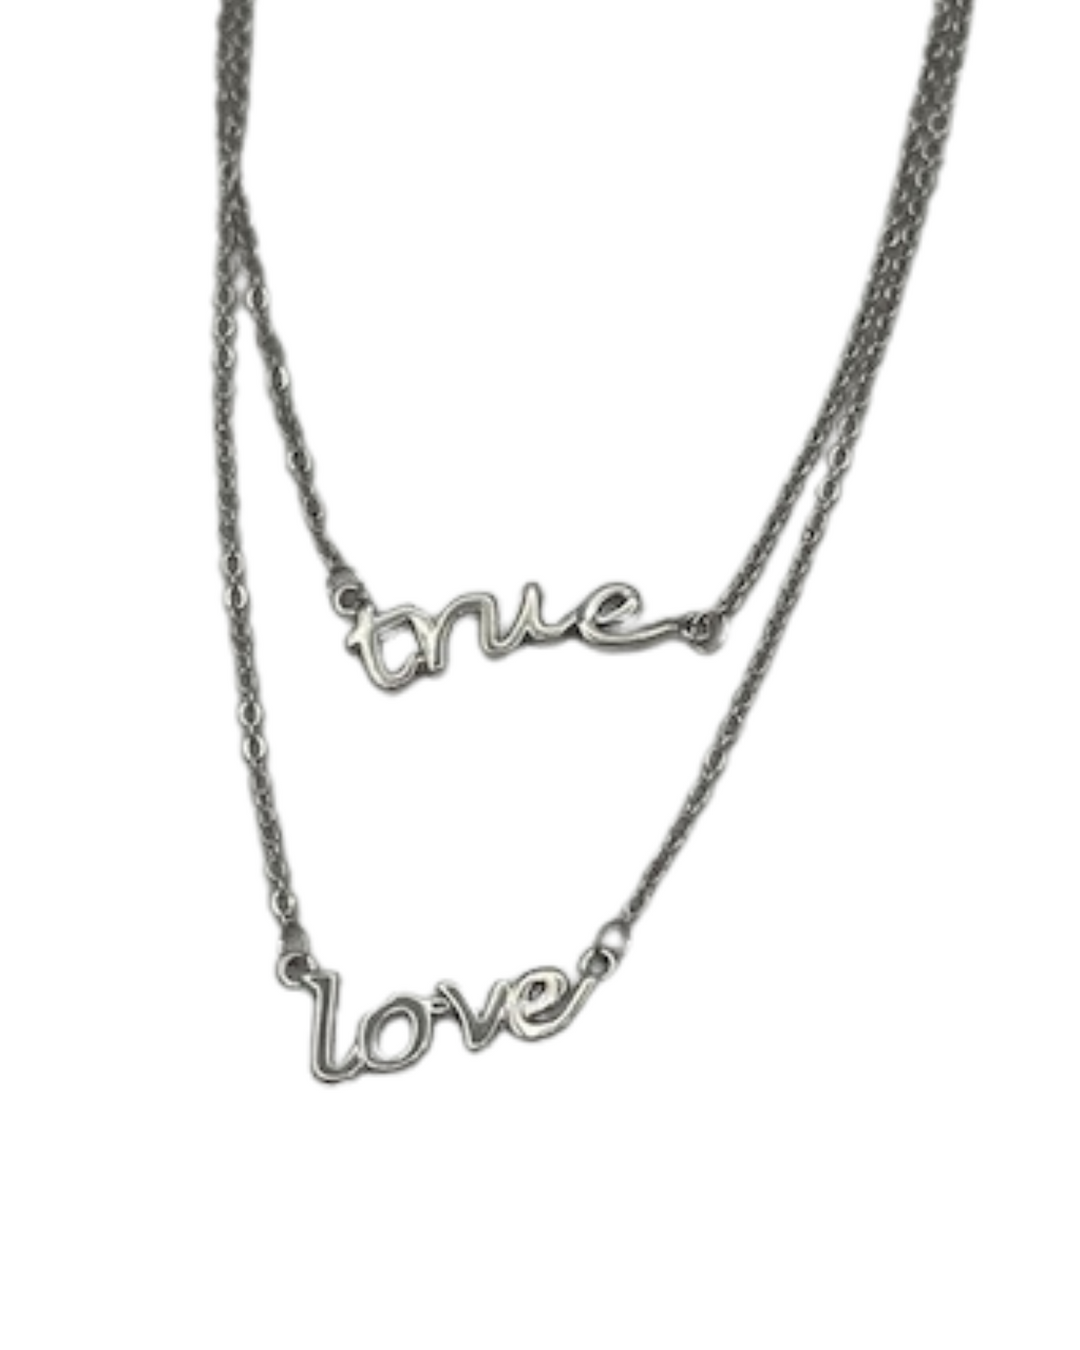 Silver "True Love" Necklace